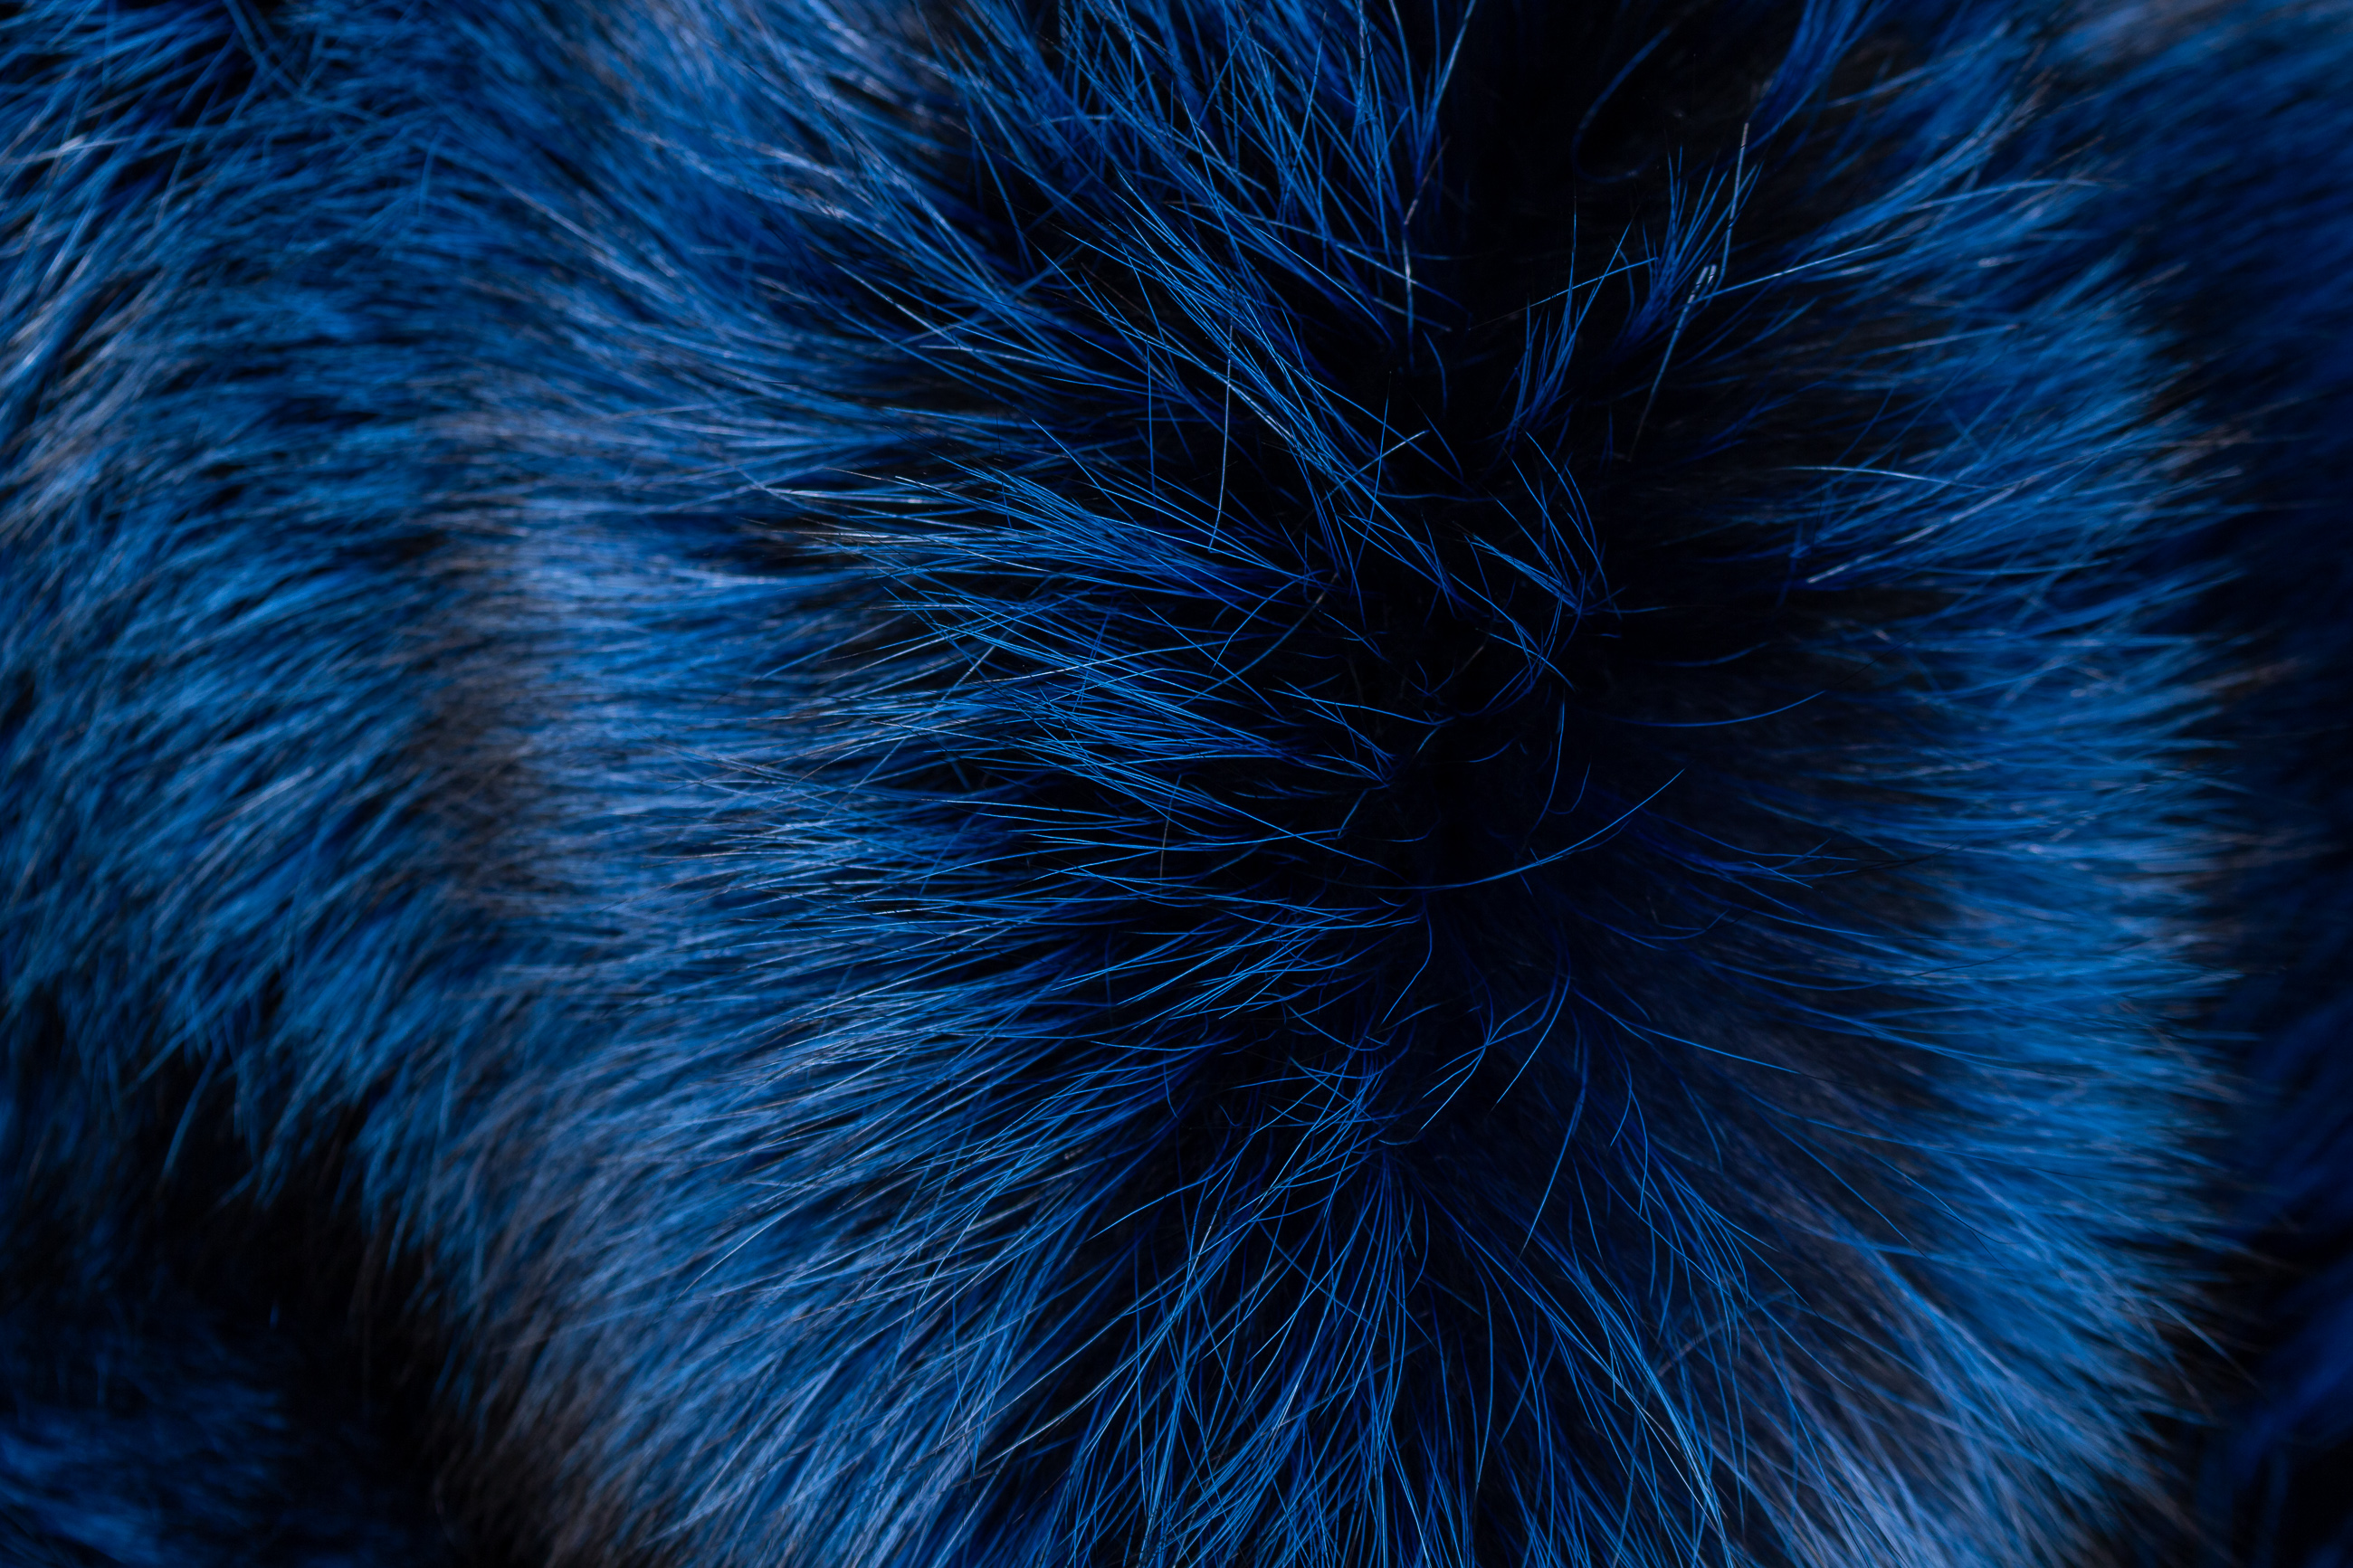 Blue Silver Fox Fur Throw From Scandinavian Foxes